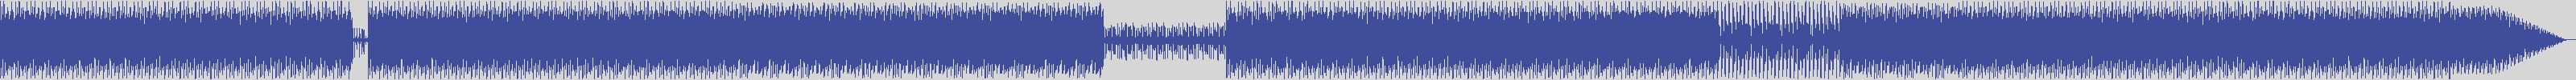 nf_boyz_records [NFY057] Dj Pistol - Drim Red Box [Extended Mix] audio wave form